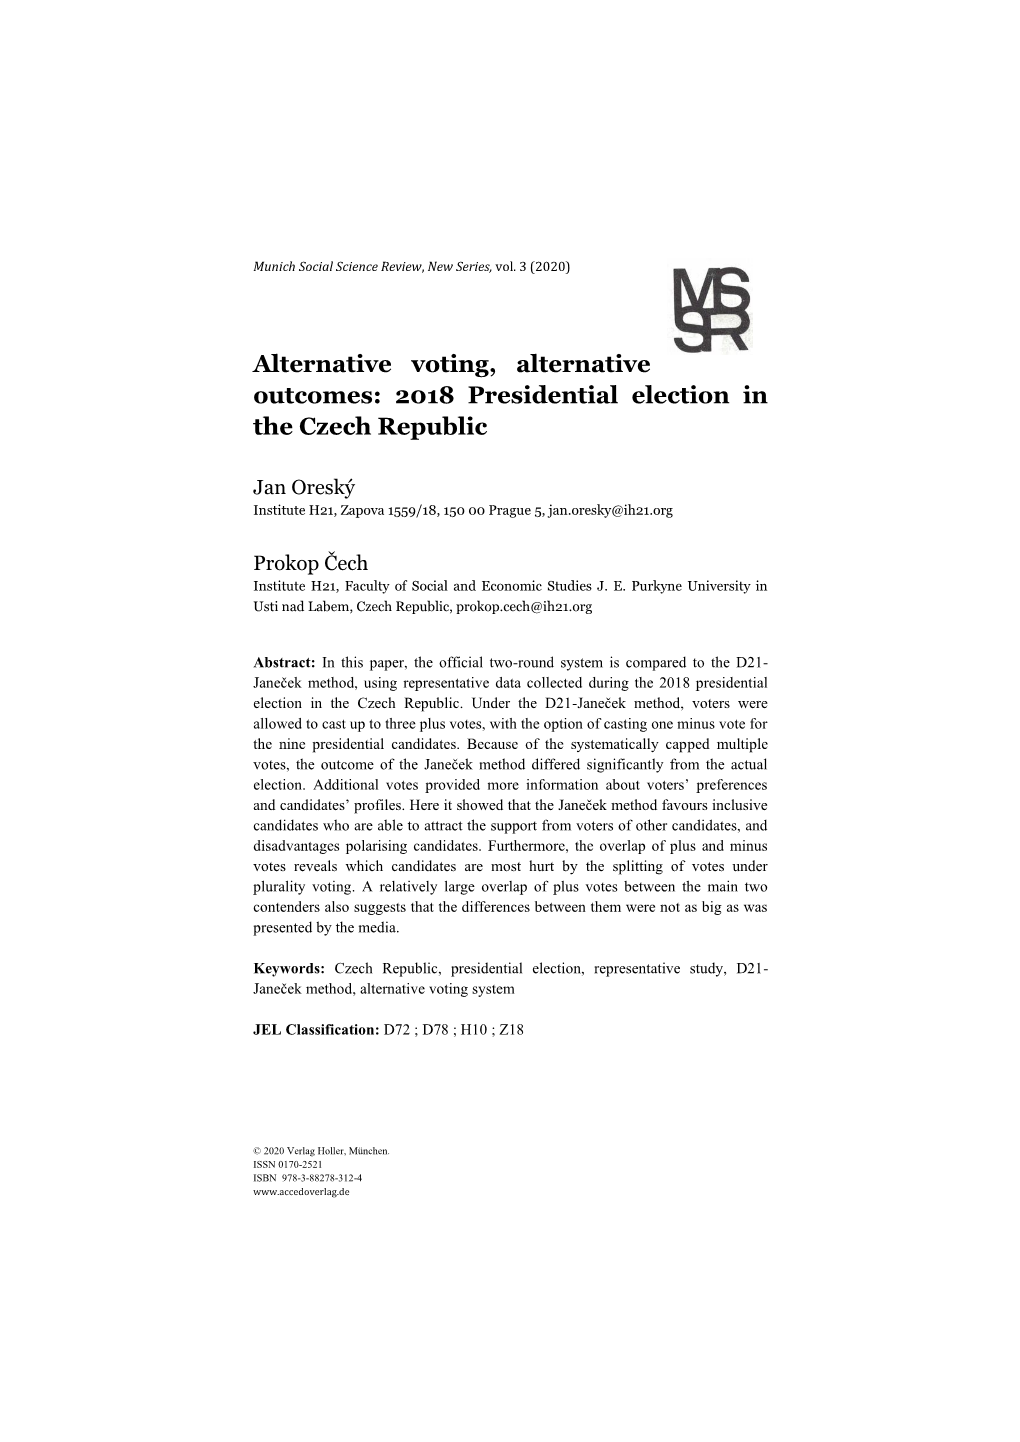 Alternative Voting, Alternative Outcomes: 2018 Presidential Election in the Czech Republic